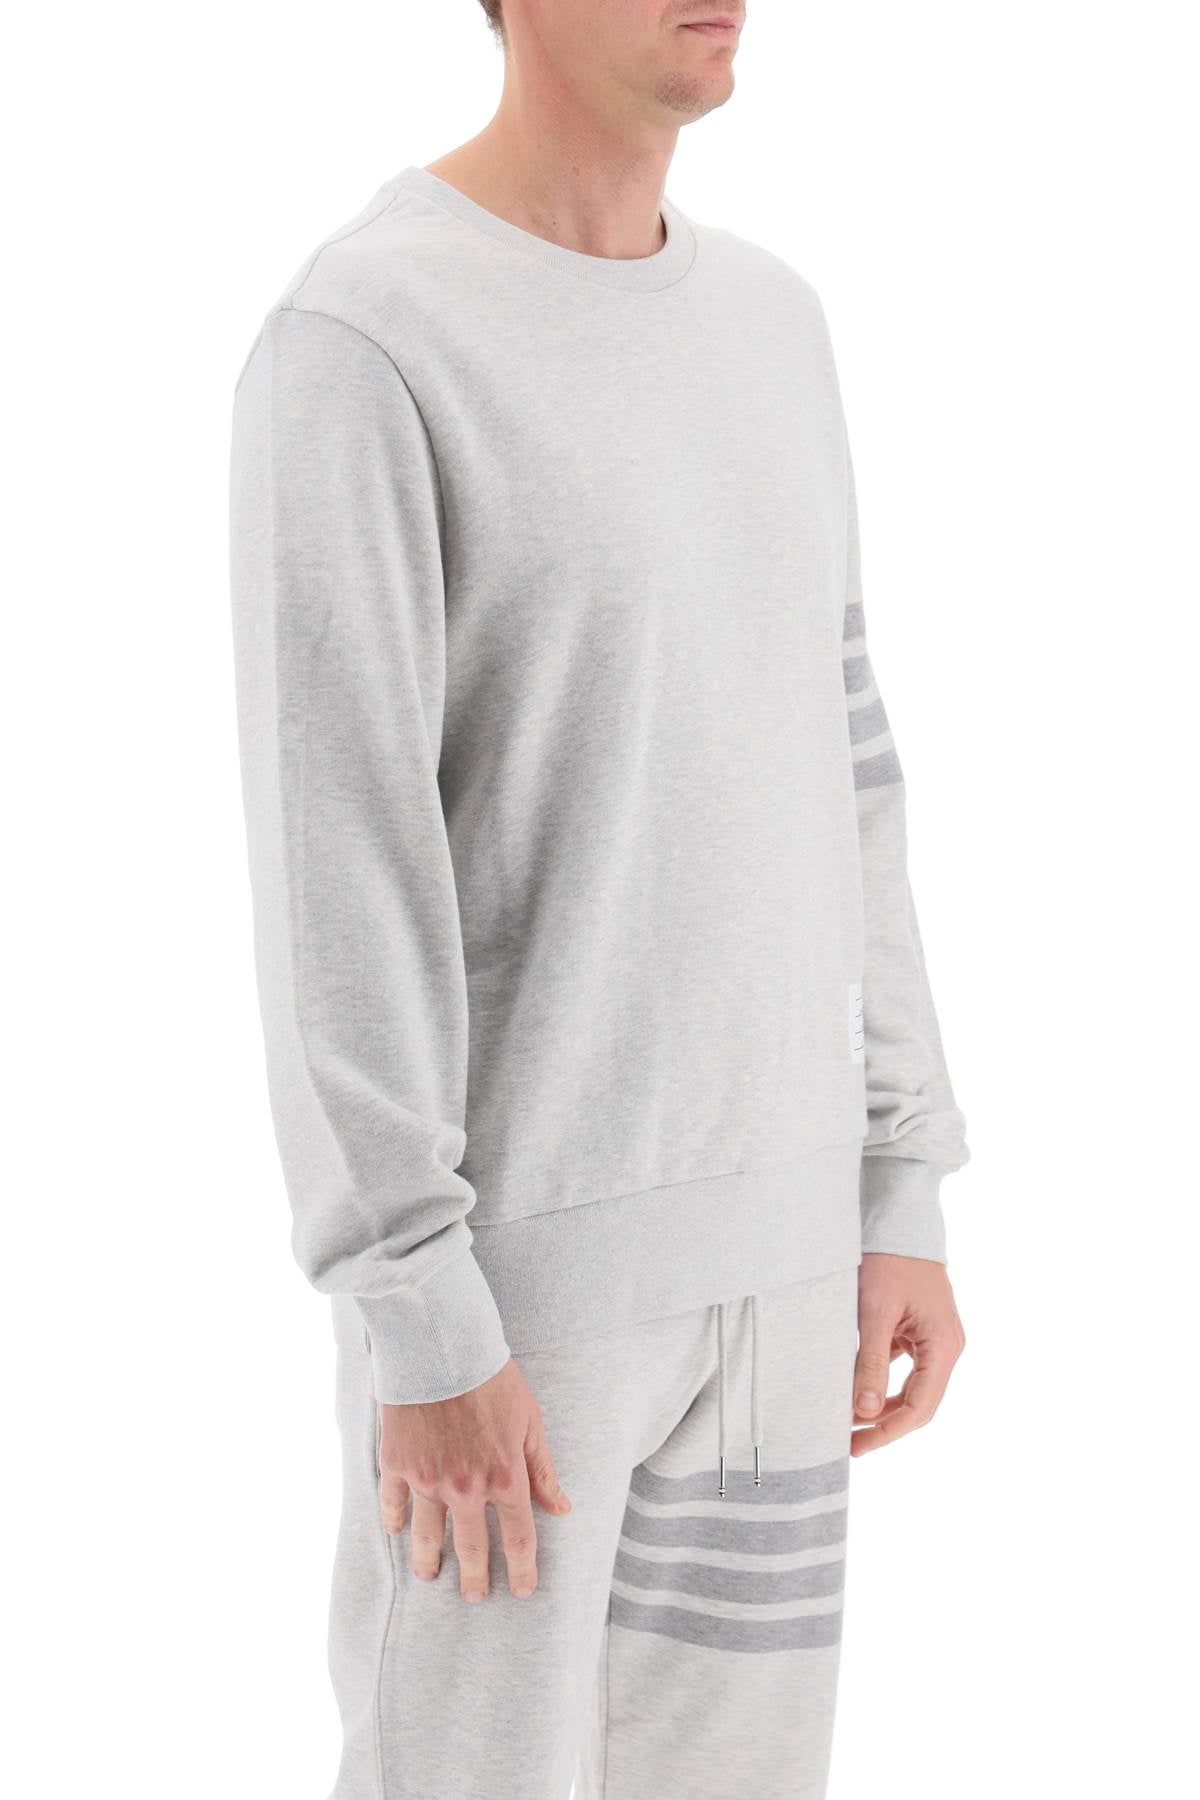 Thom browne cotton 4-bar sweatshirt-1